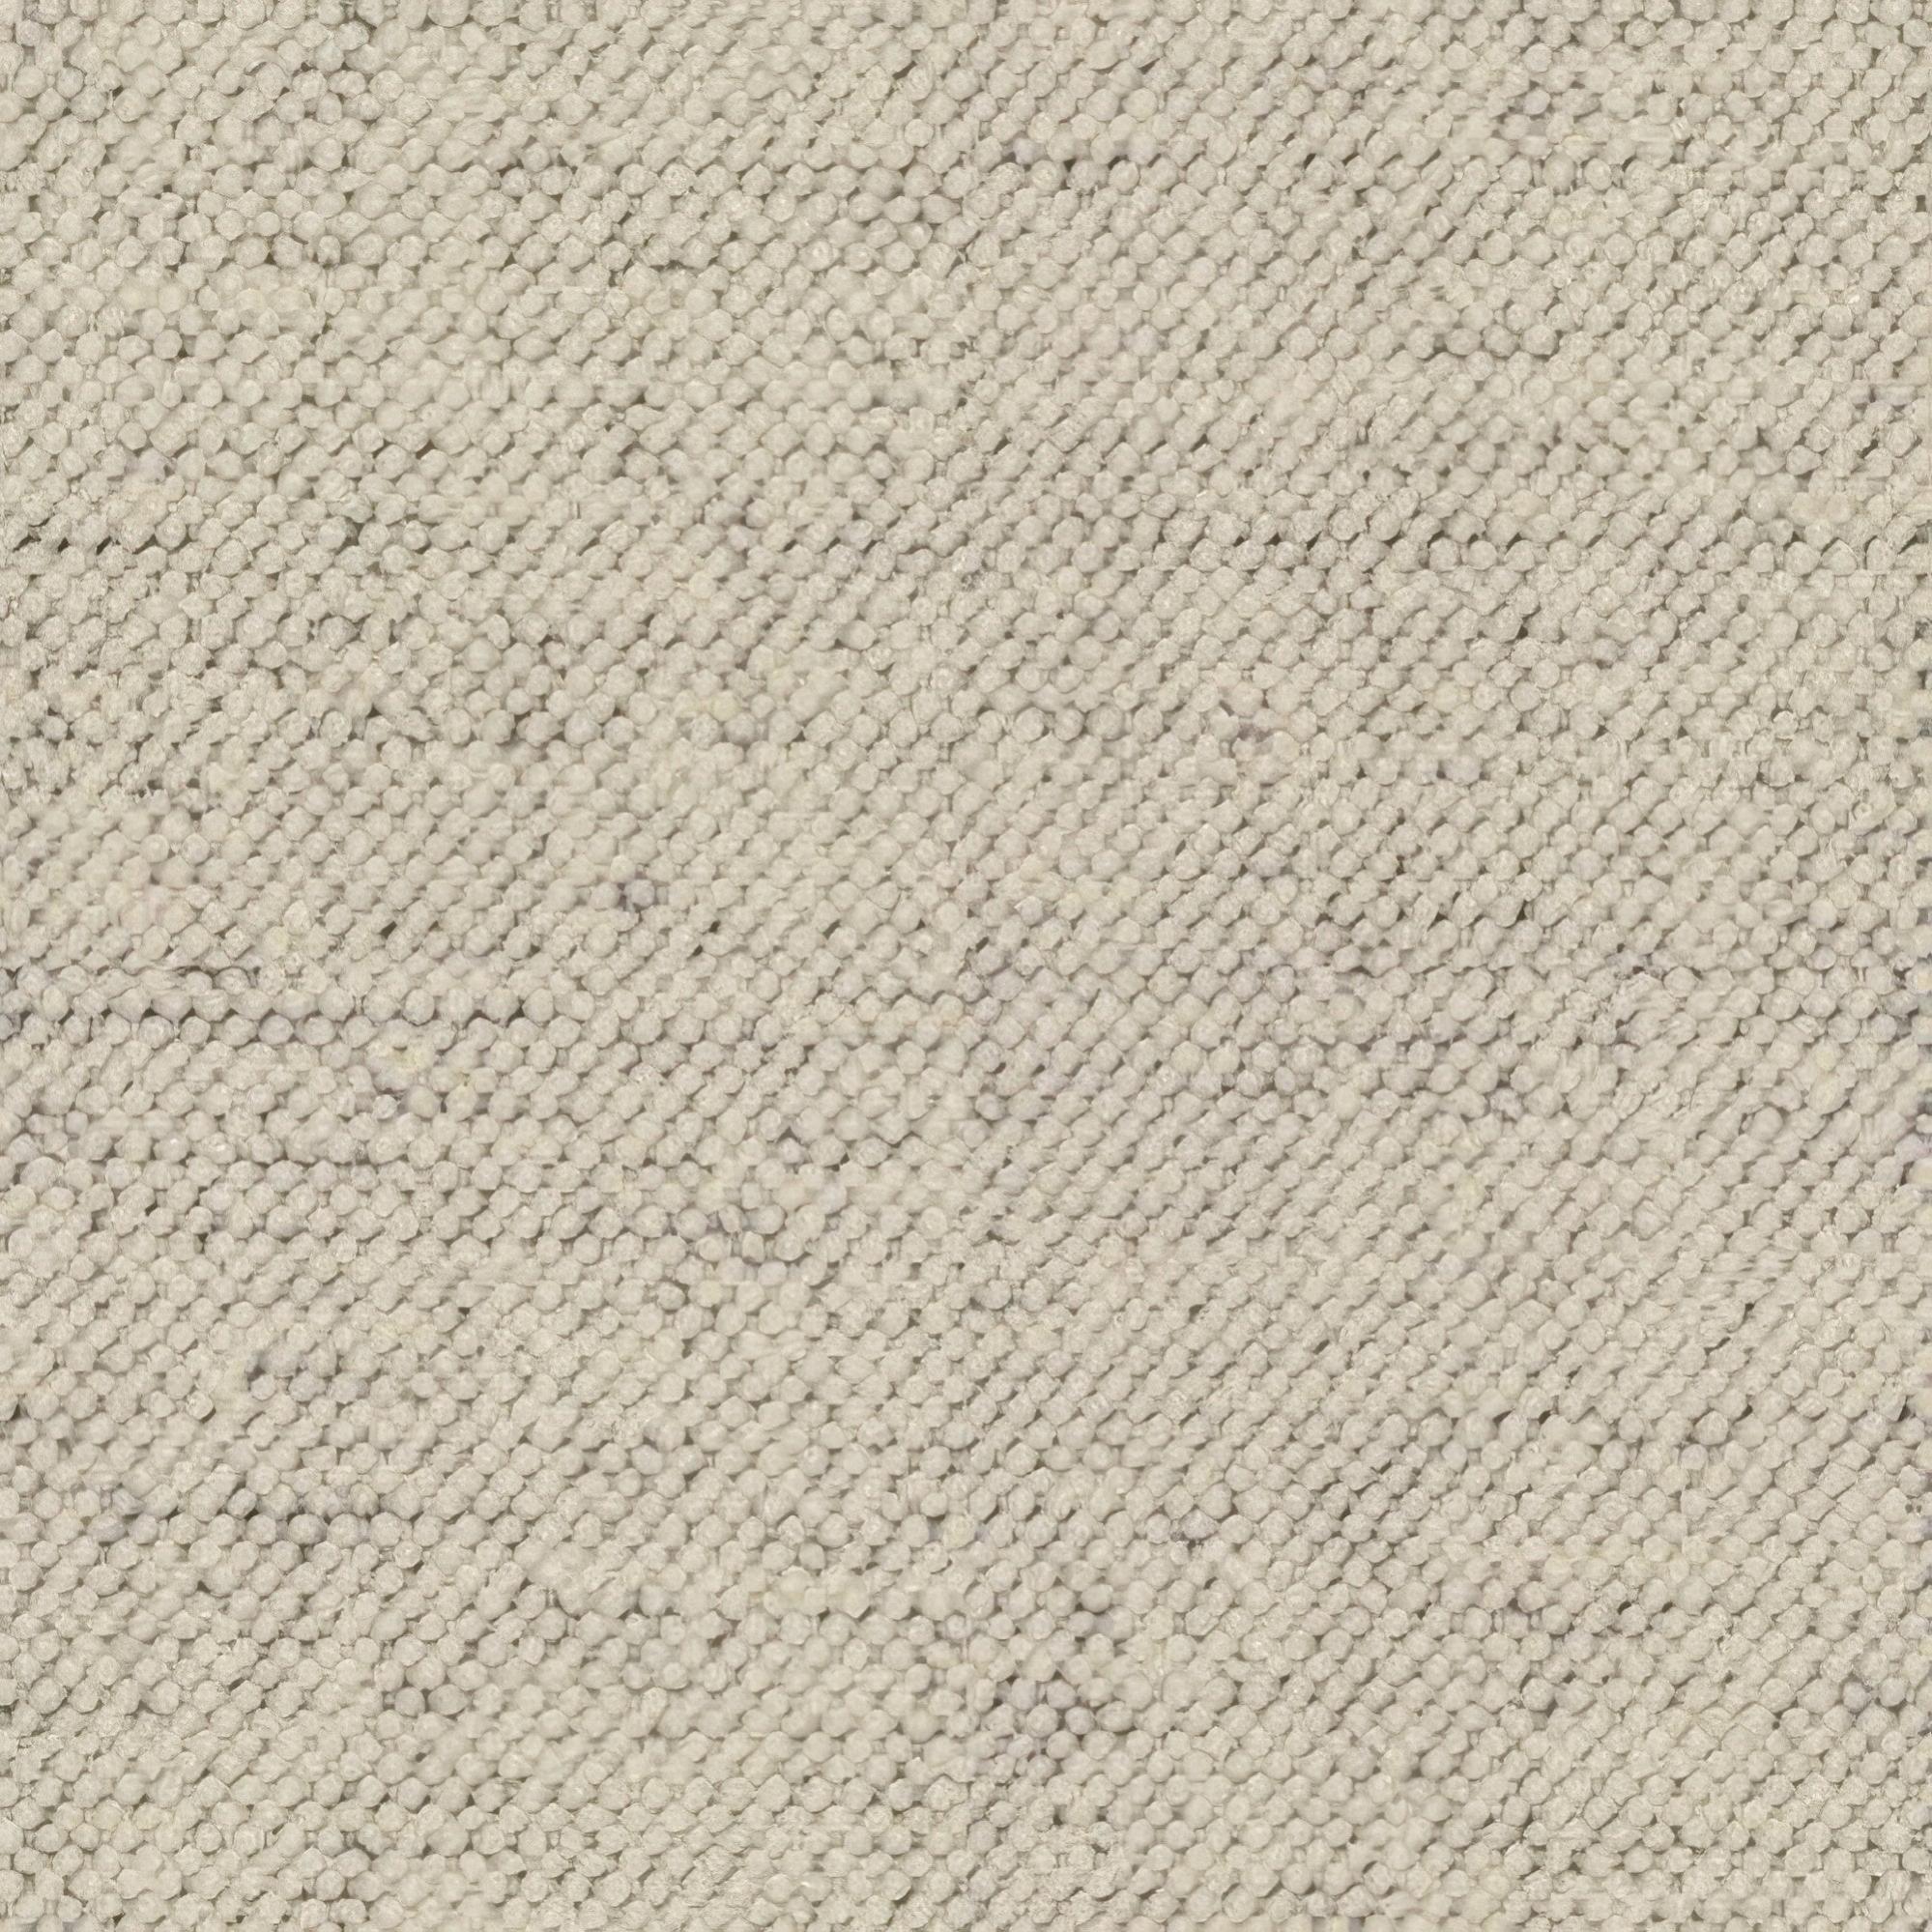 Tela al corte tapicería jacquard flint lino ancho 140 cm